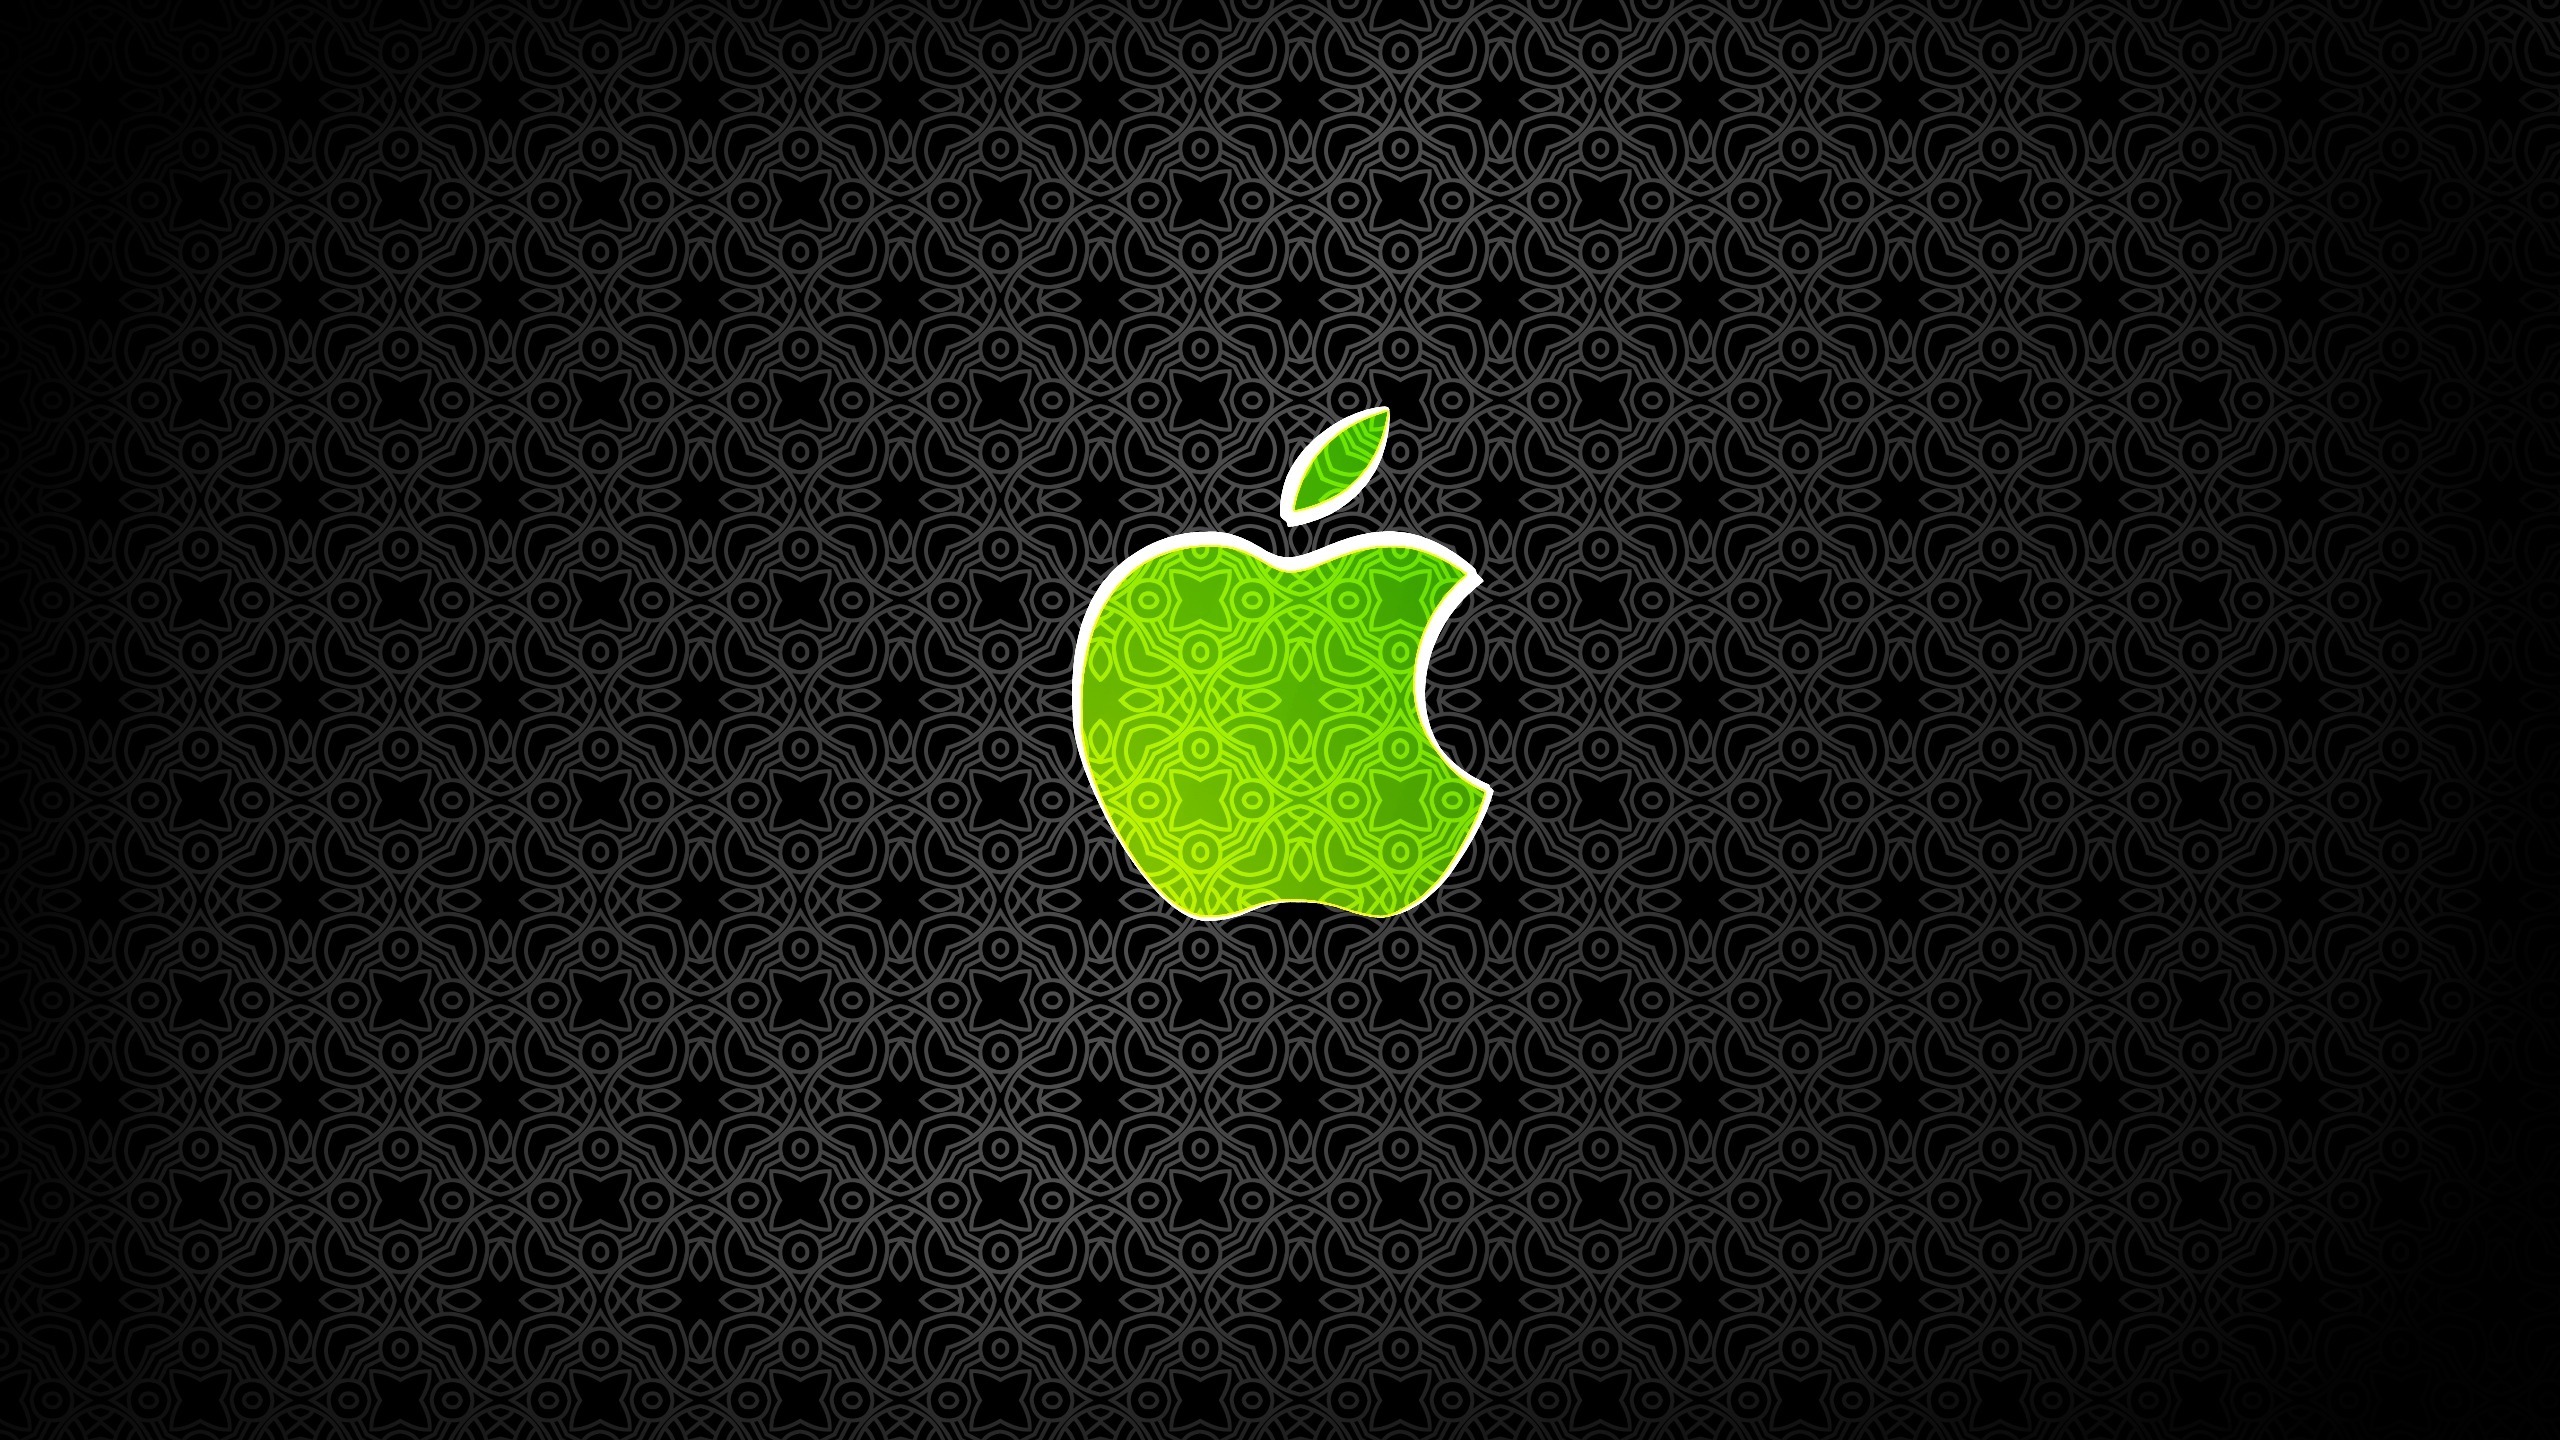 brands, logos, apple, background, black 2160p